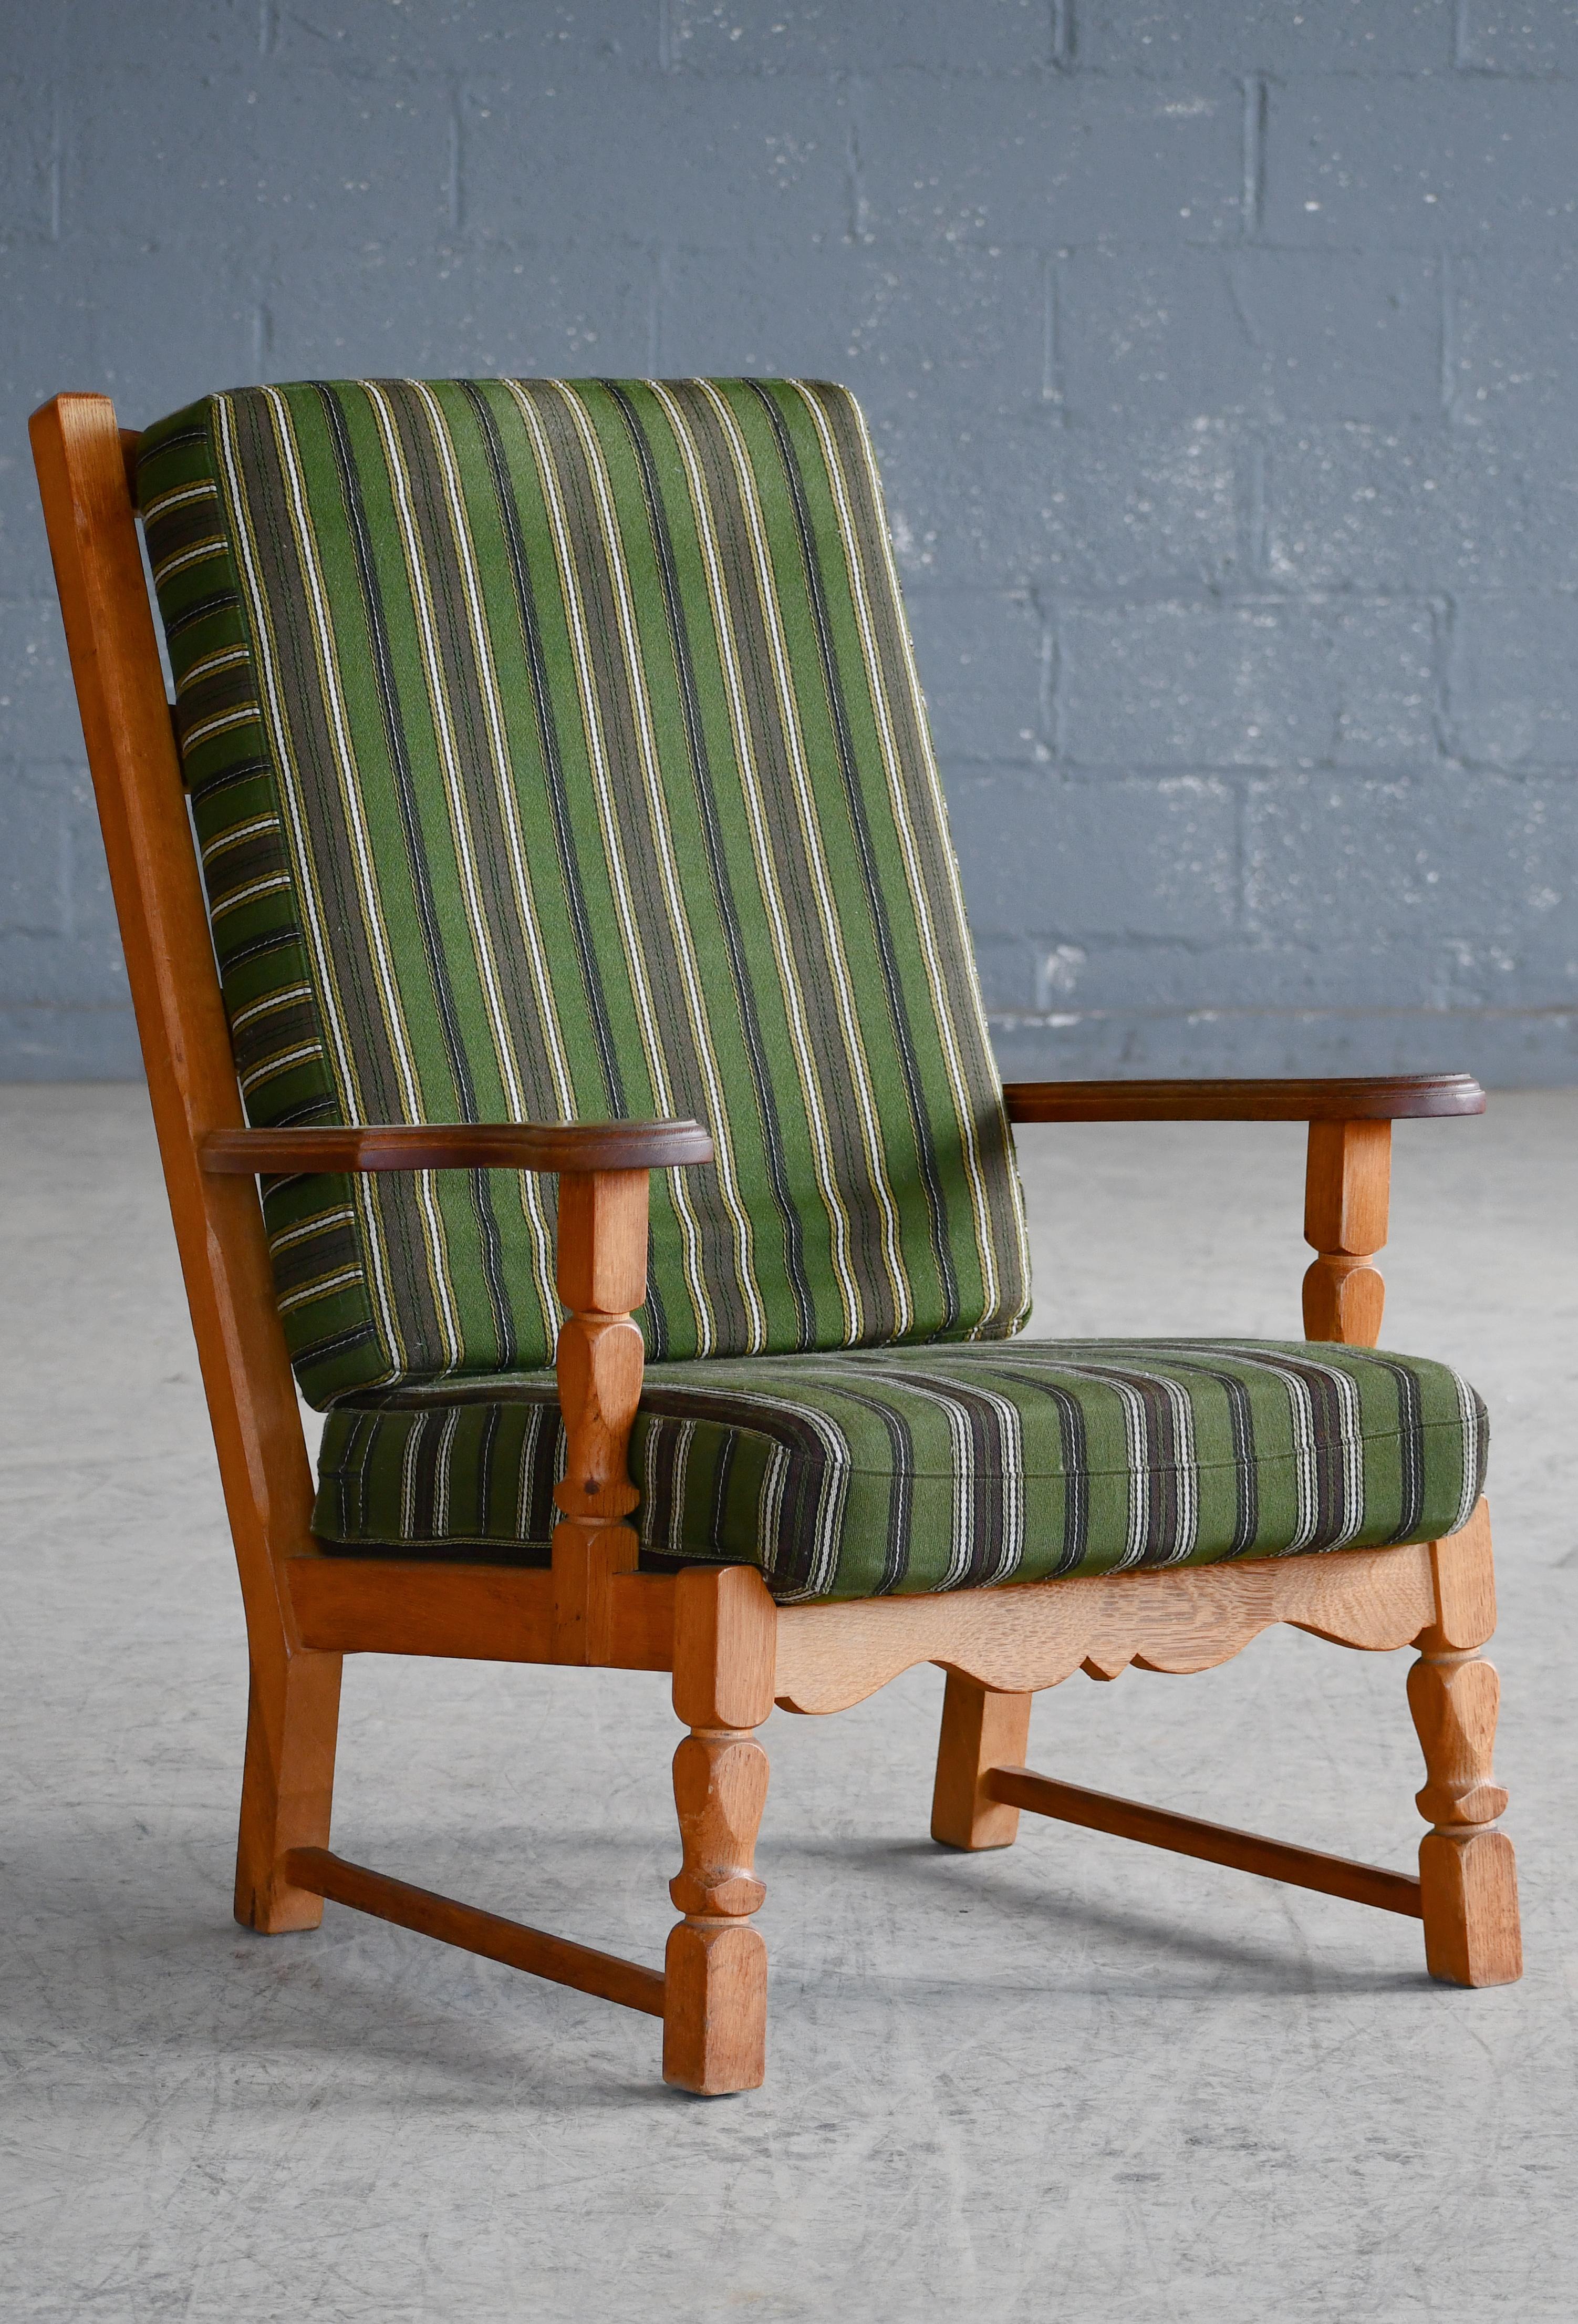 Danish Mid-Century Carved Oak Lounge Chairs in Oak by Kjaernulf, 1960's For Sale 2